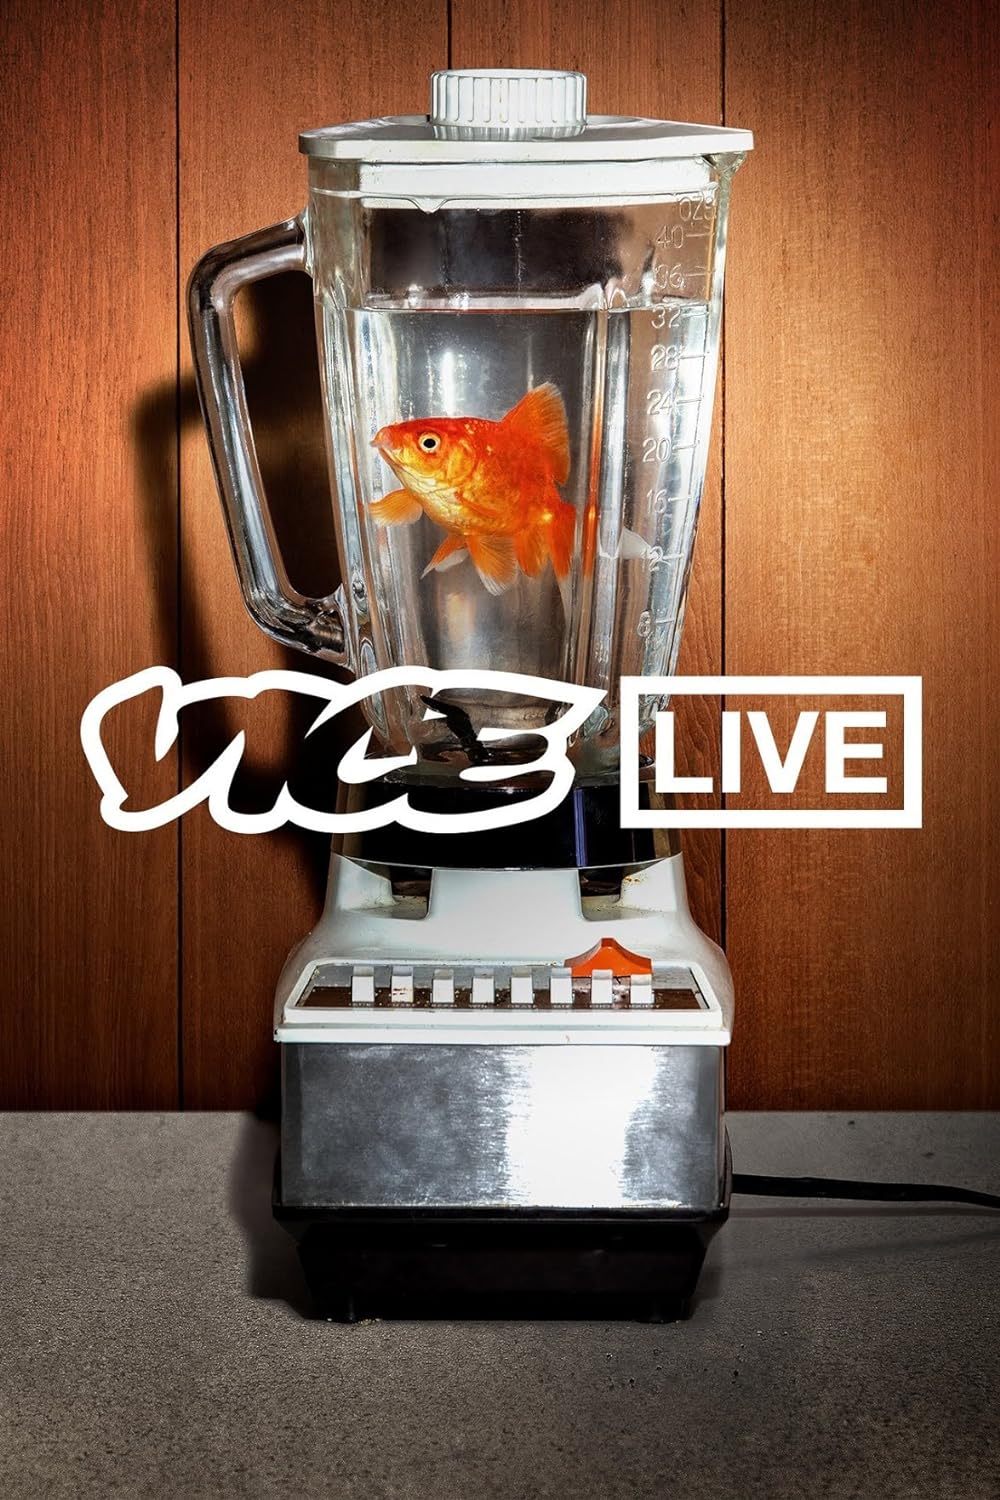 Vice Live